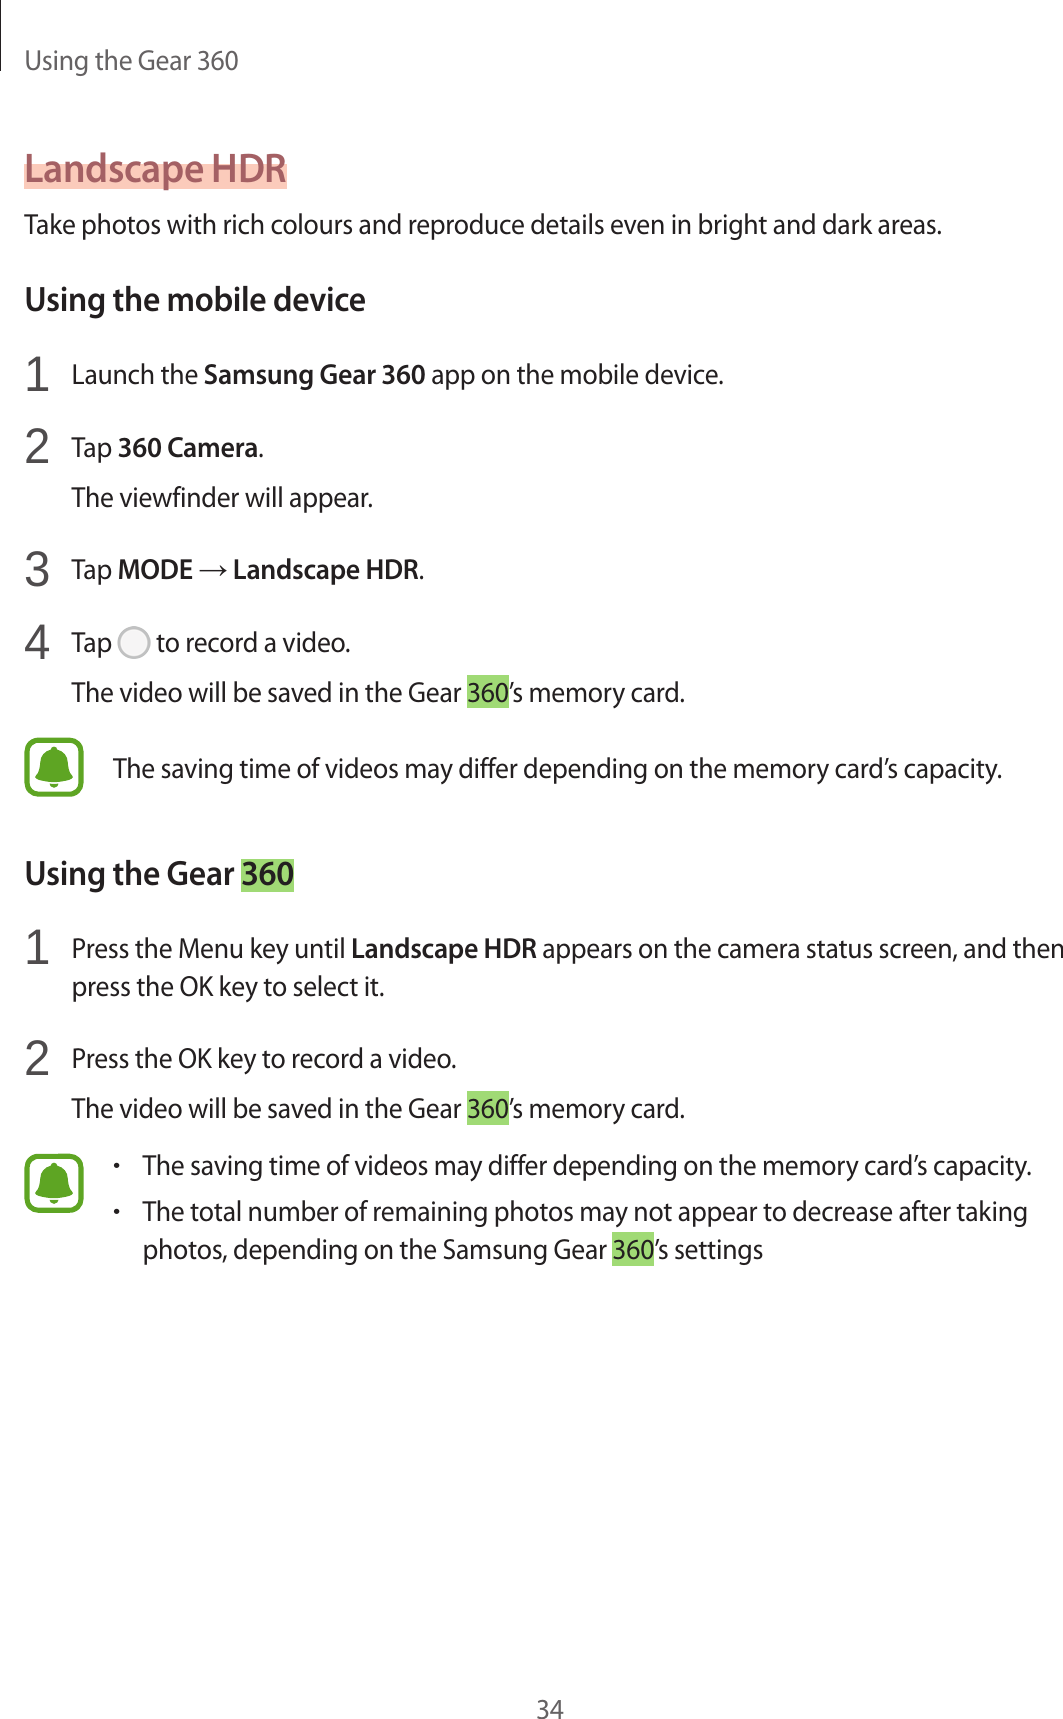 Samsung gear 360 user manual pdf 2 8